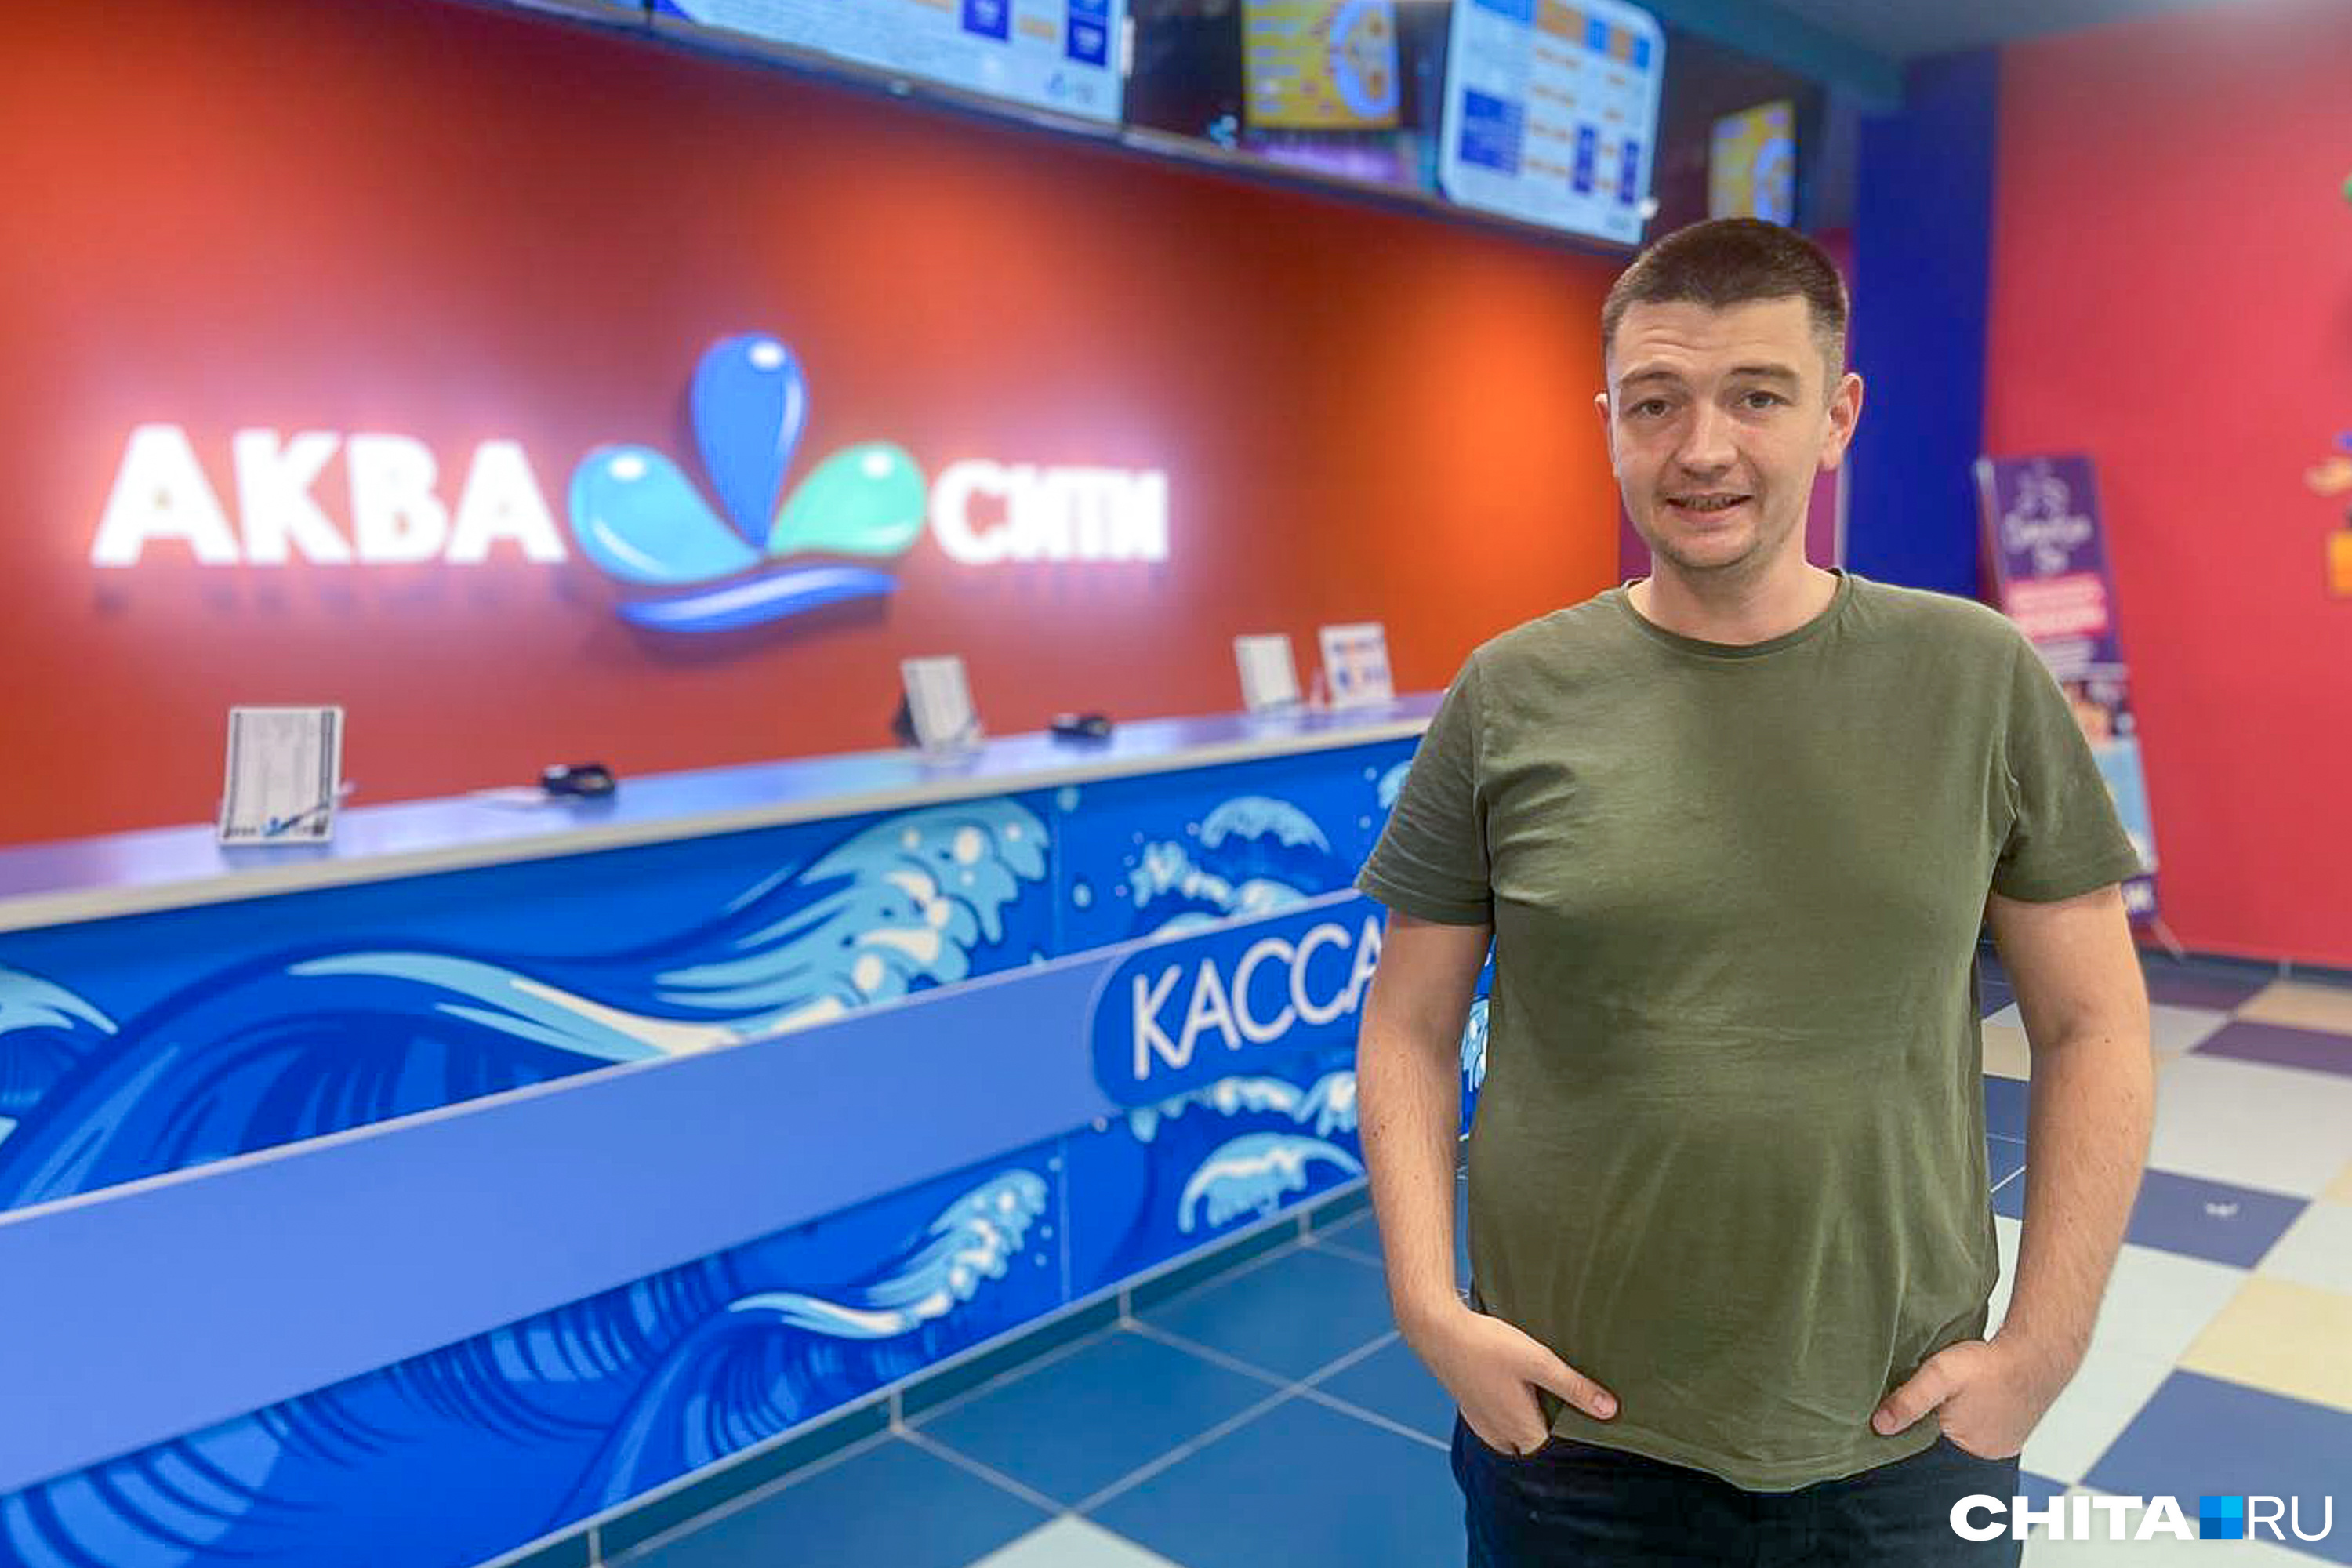 Управляющий аквапарком Артём Катаев